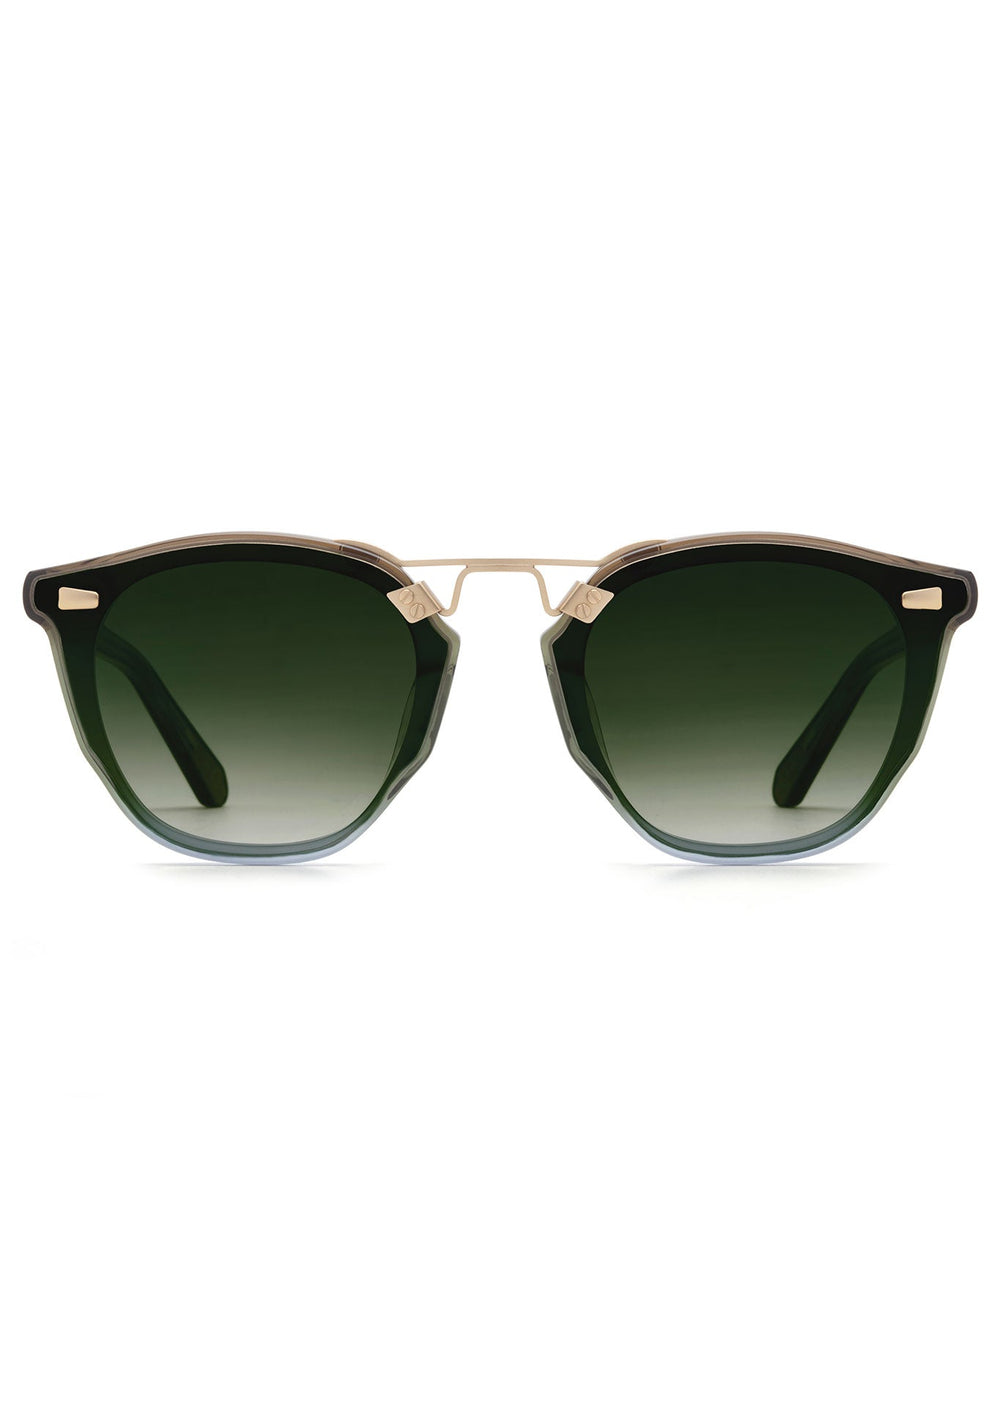 KREWE BEAU NYLON | Matcha 12K Handcrafted, Green Acetate Luxury Sunglasses